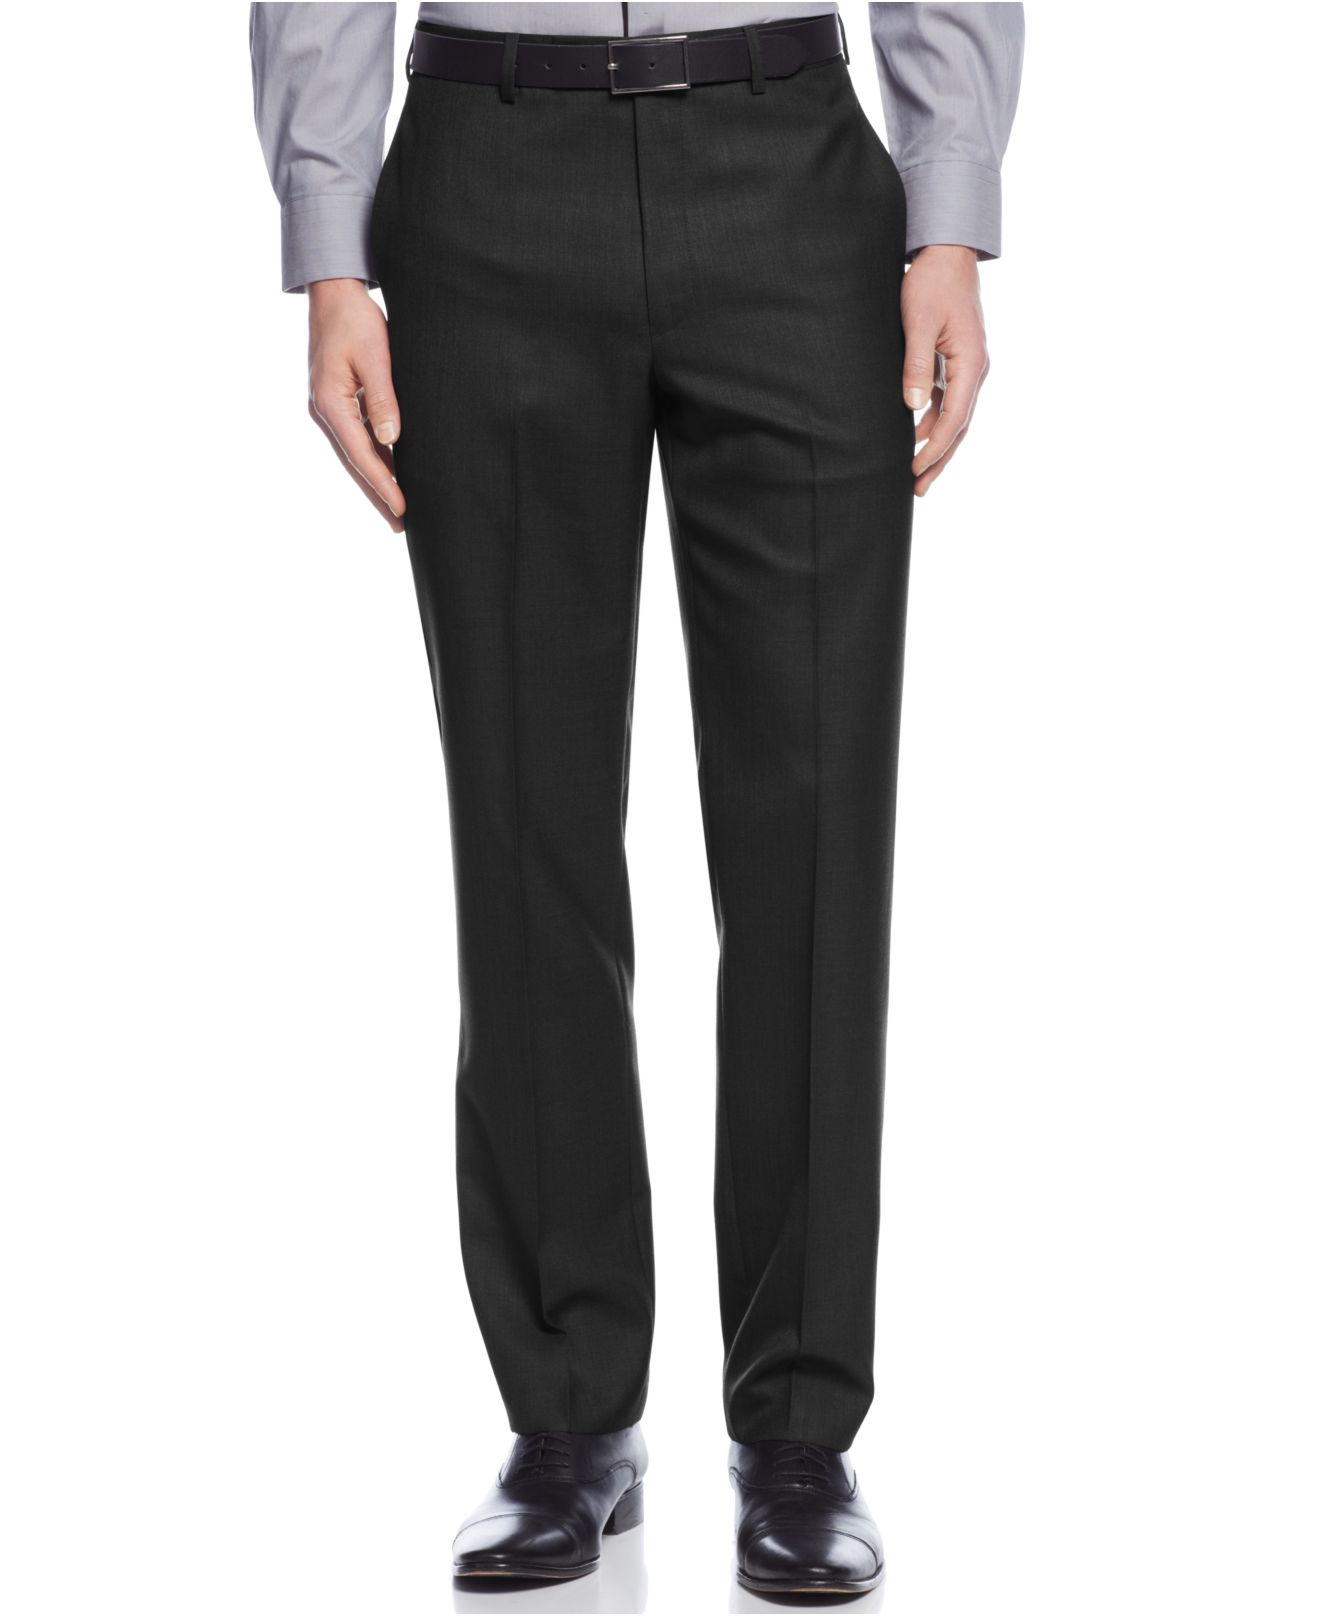 Calvin klein Slim-fit Solid Dress Pants in Black for Men - Save 22% | Lyst